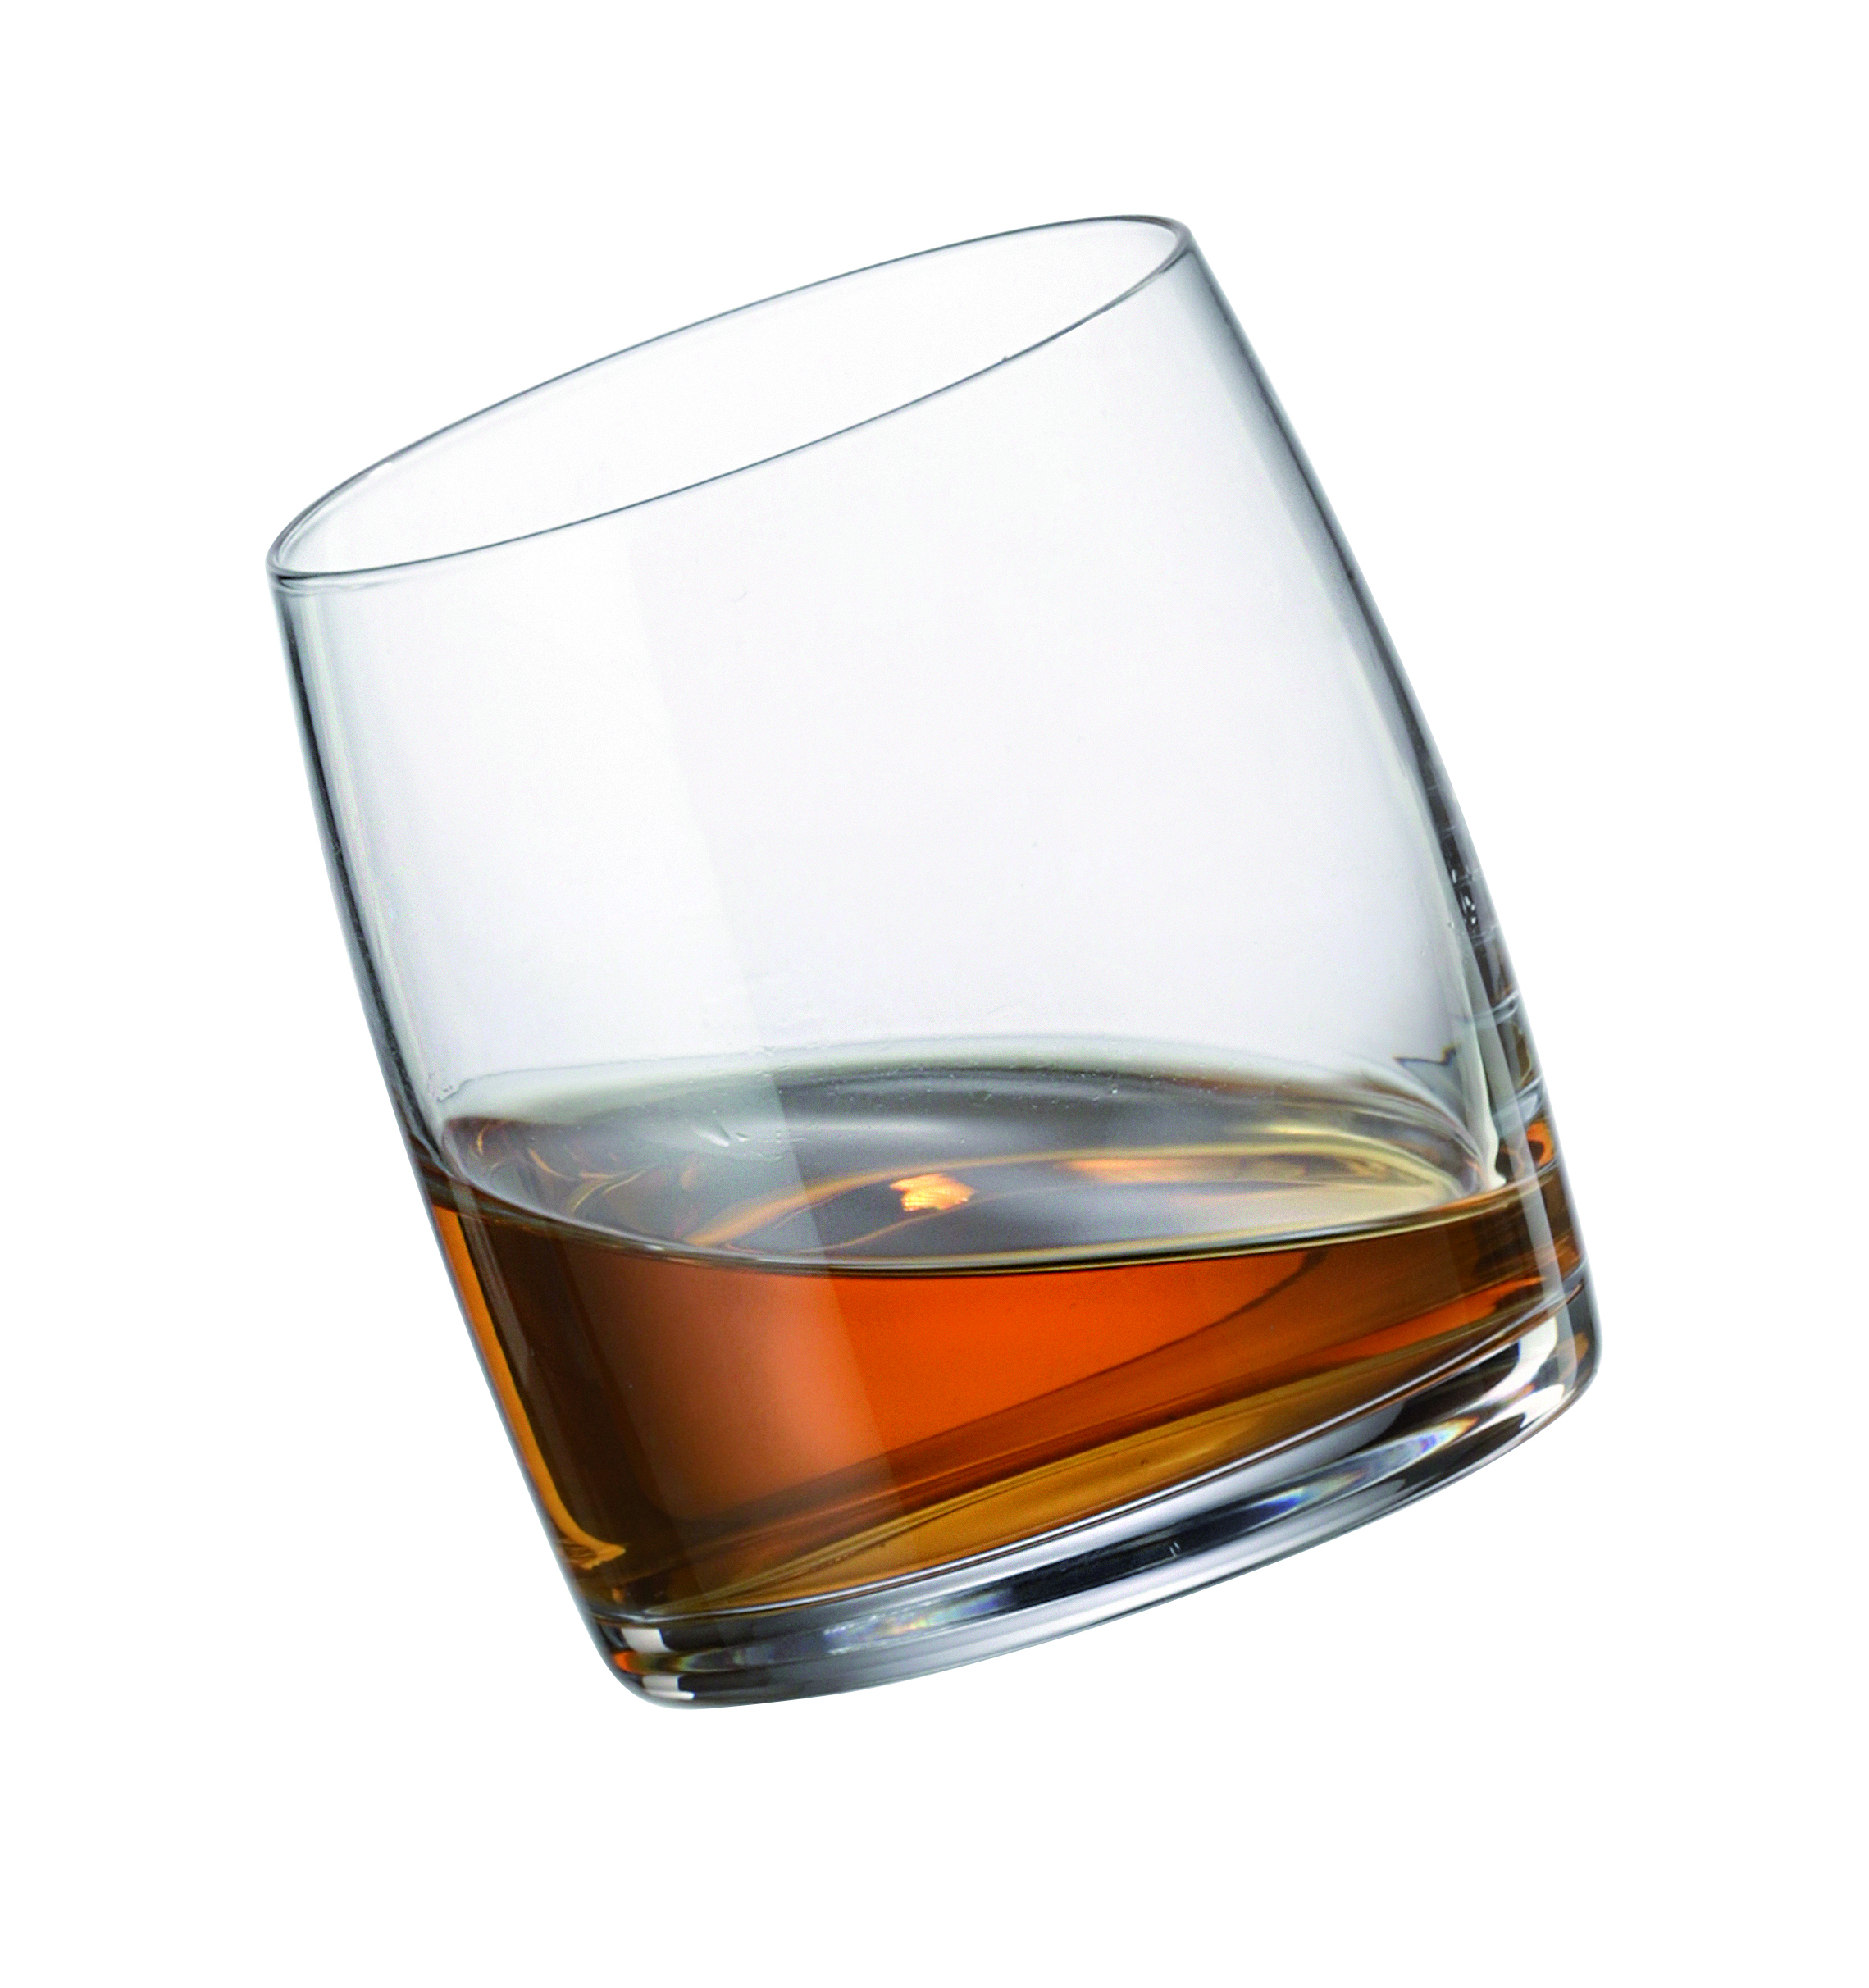 Leona Crystalline 280 Ml Whisky Glass 4 Pk